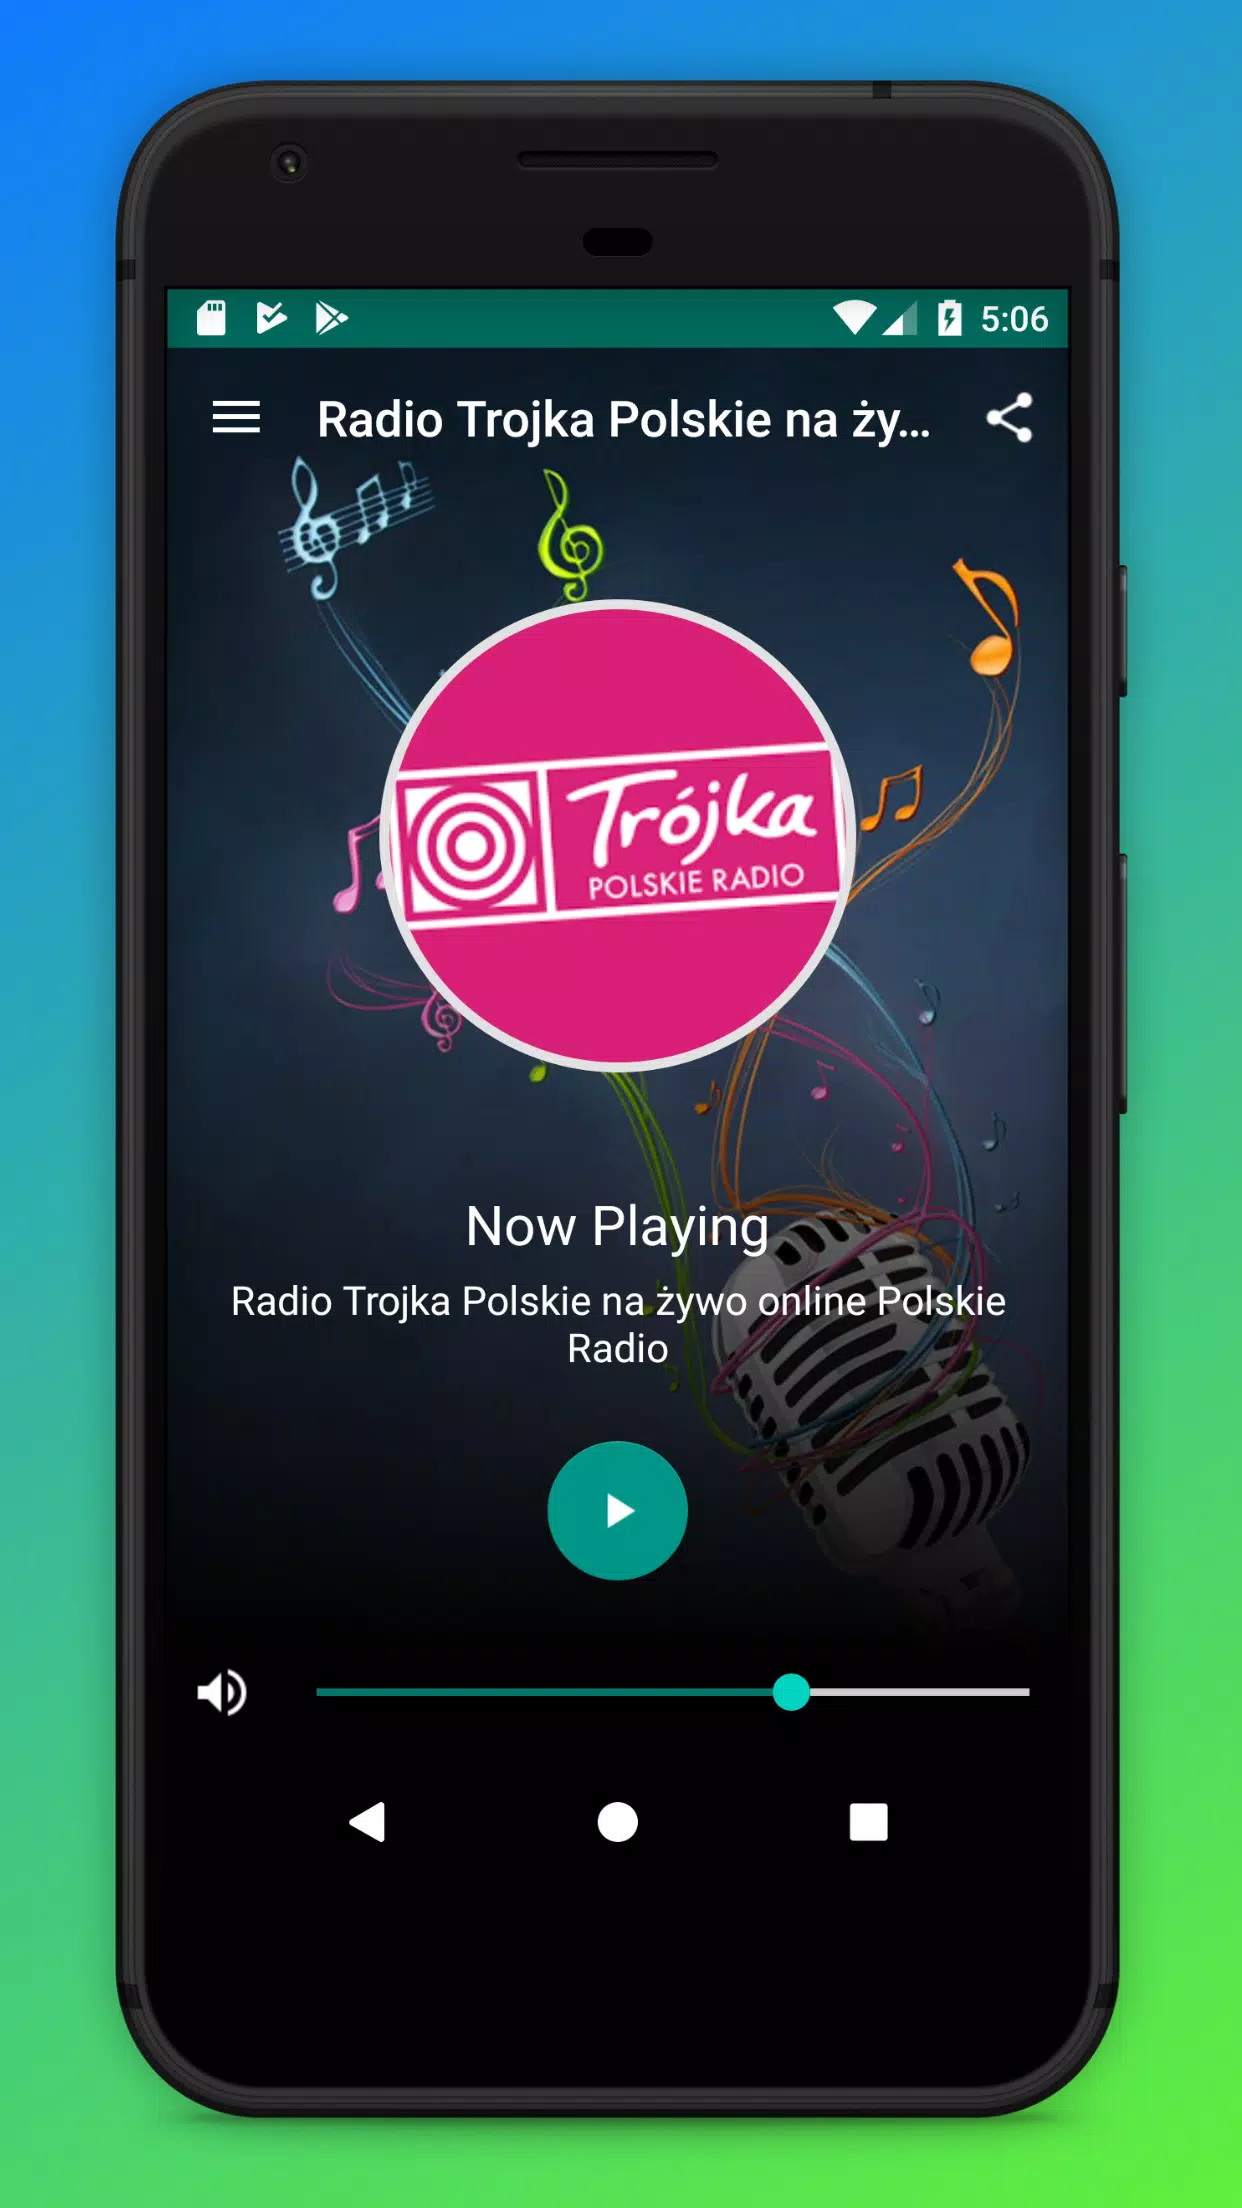 Polskie Radio Trojka FM Online for Android - APK Download